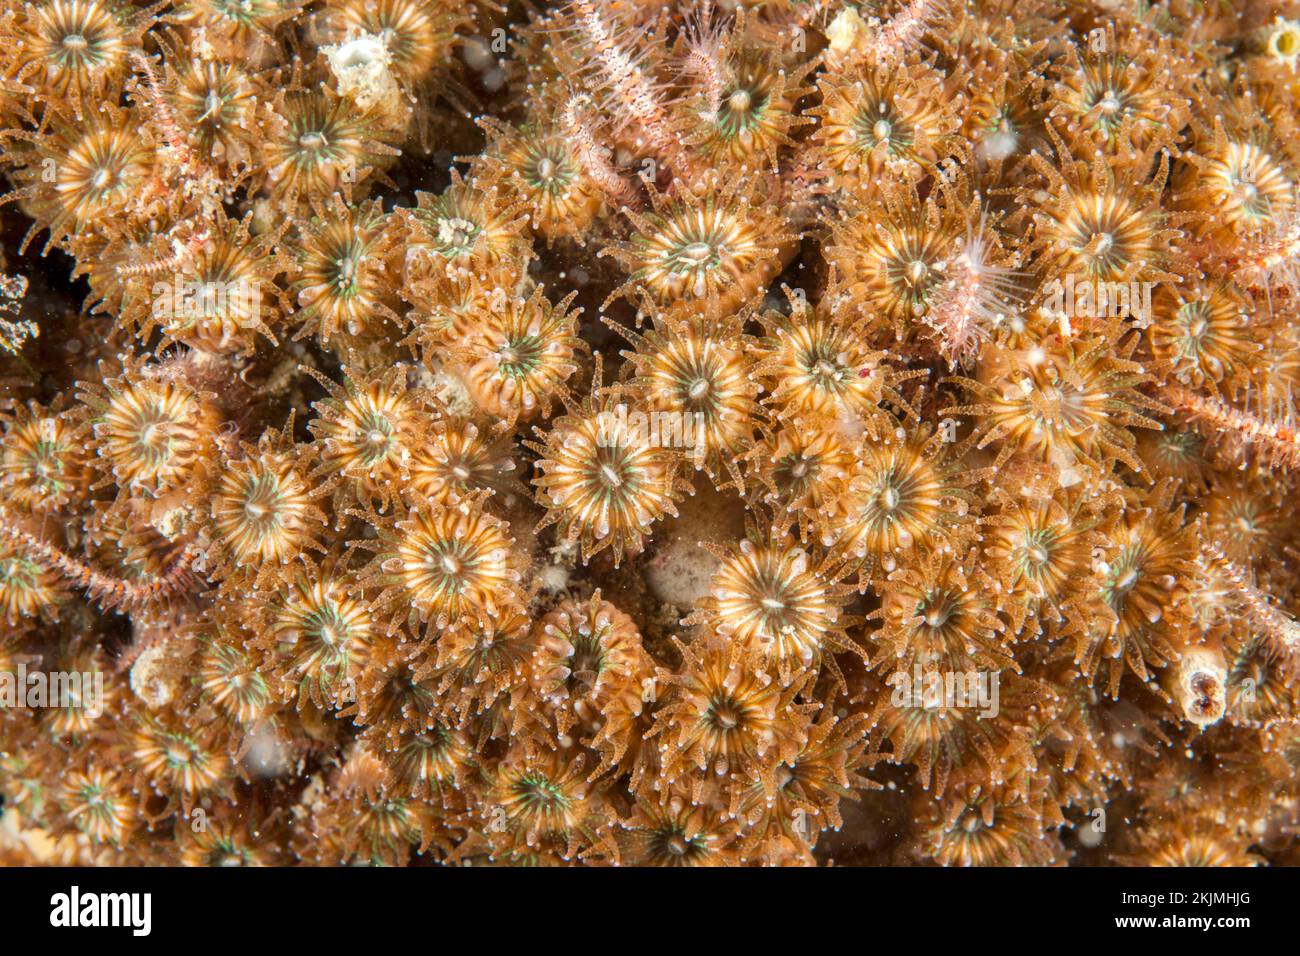 Cladocora coral (Cladocora caespitosa) . 'côte agathoise' Marine Protected Area, gulf of Lion, Cap d'Agde, France, Europe Stock Photo